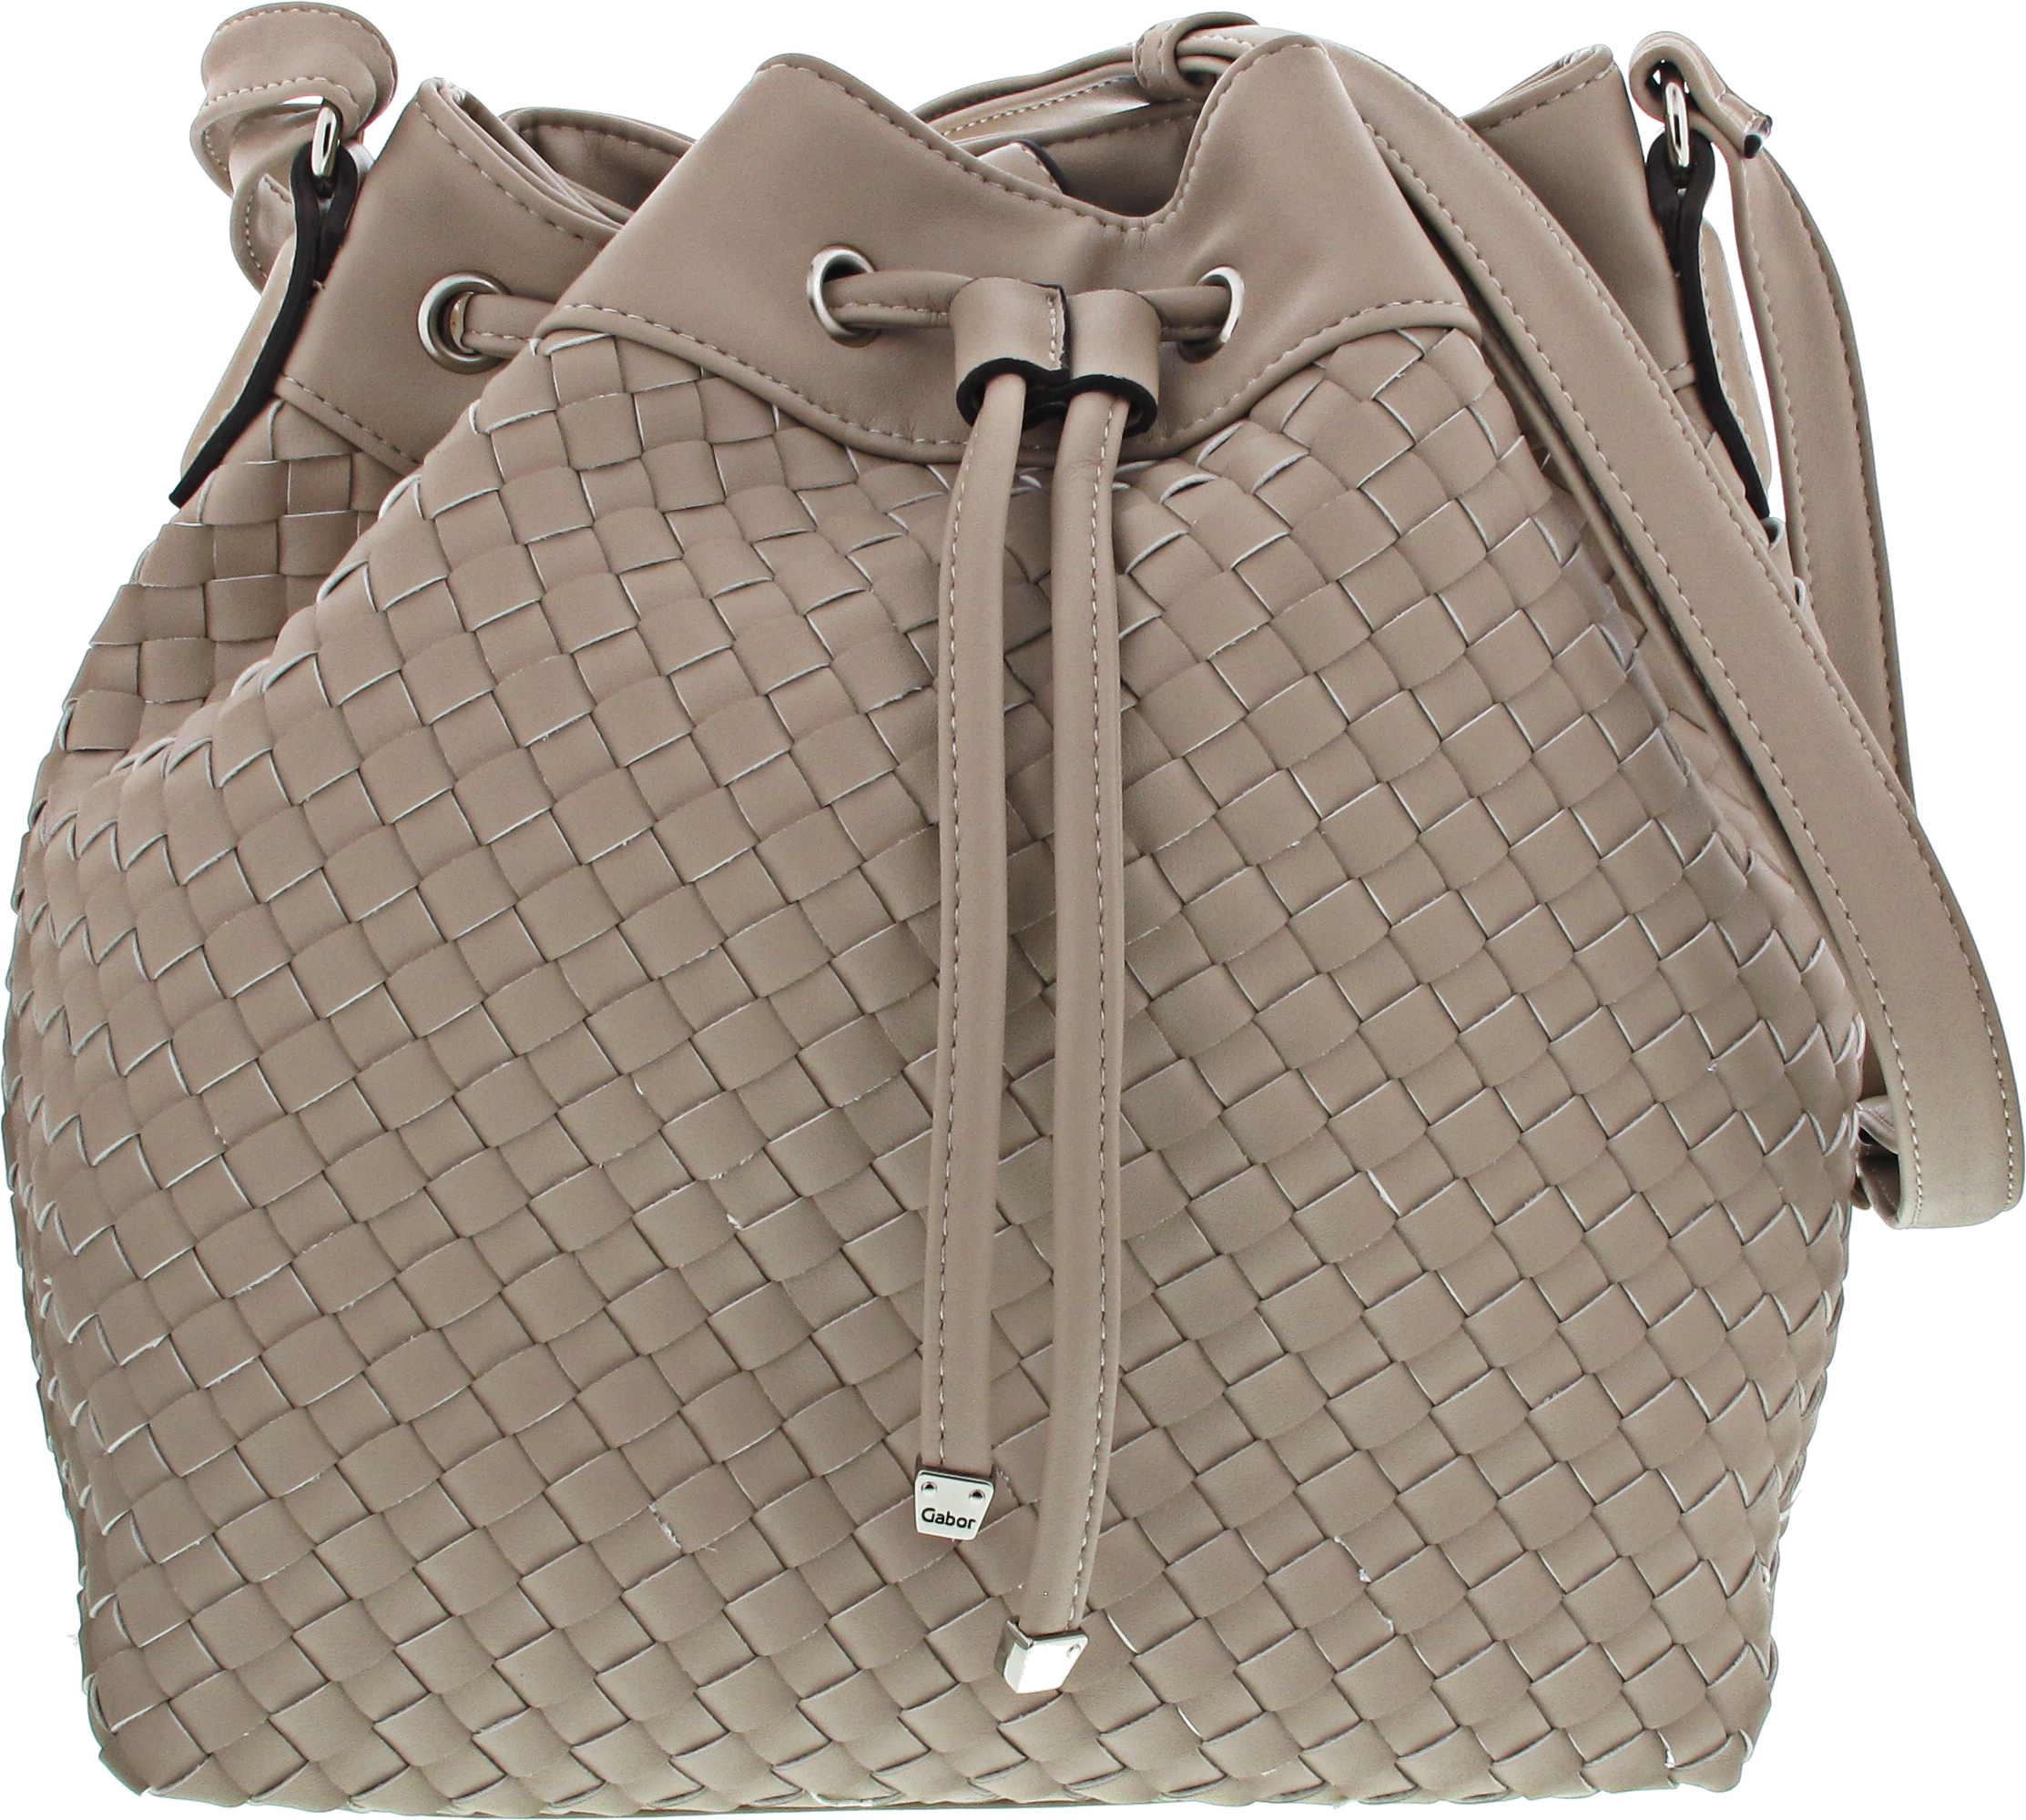 Gabor Emilia Bucket Bag